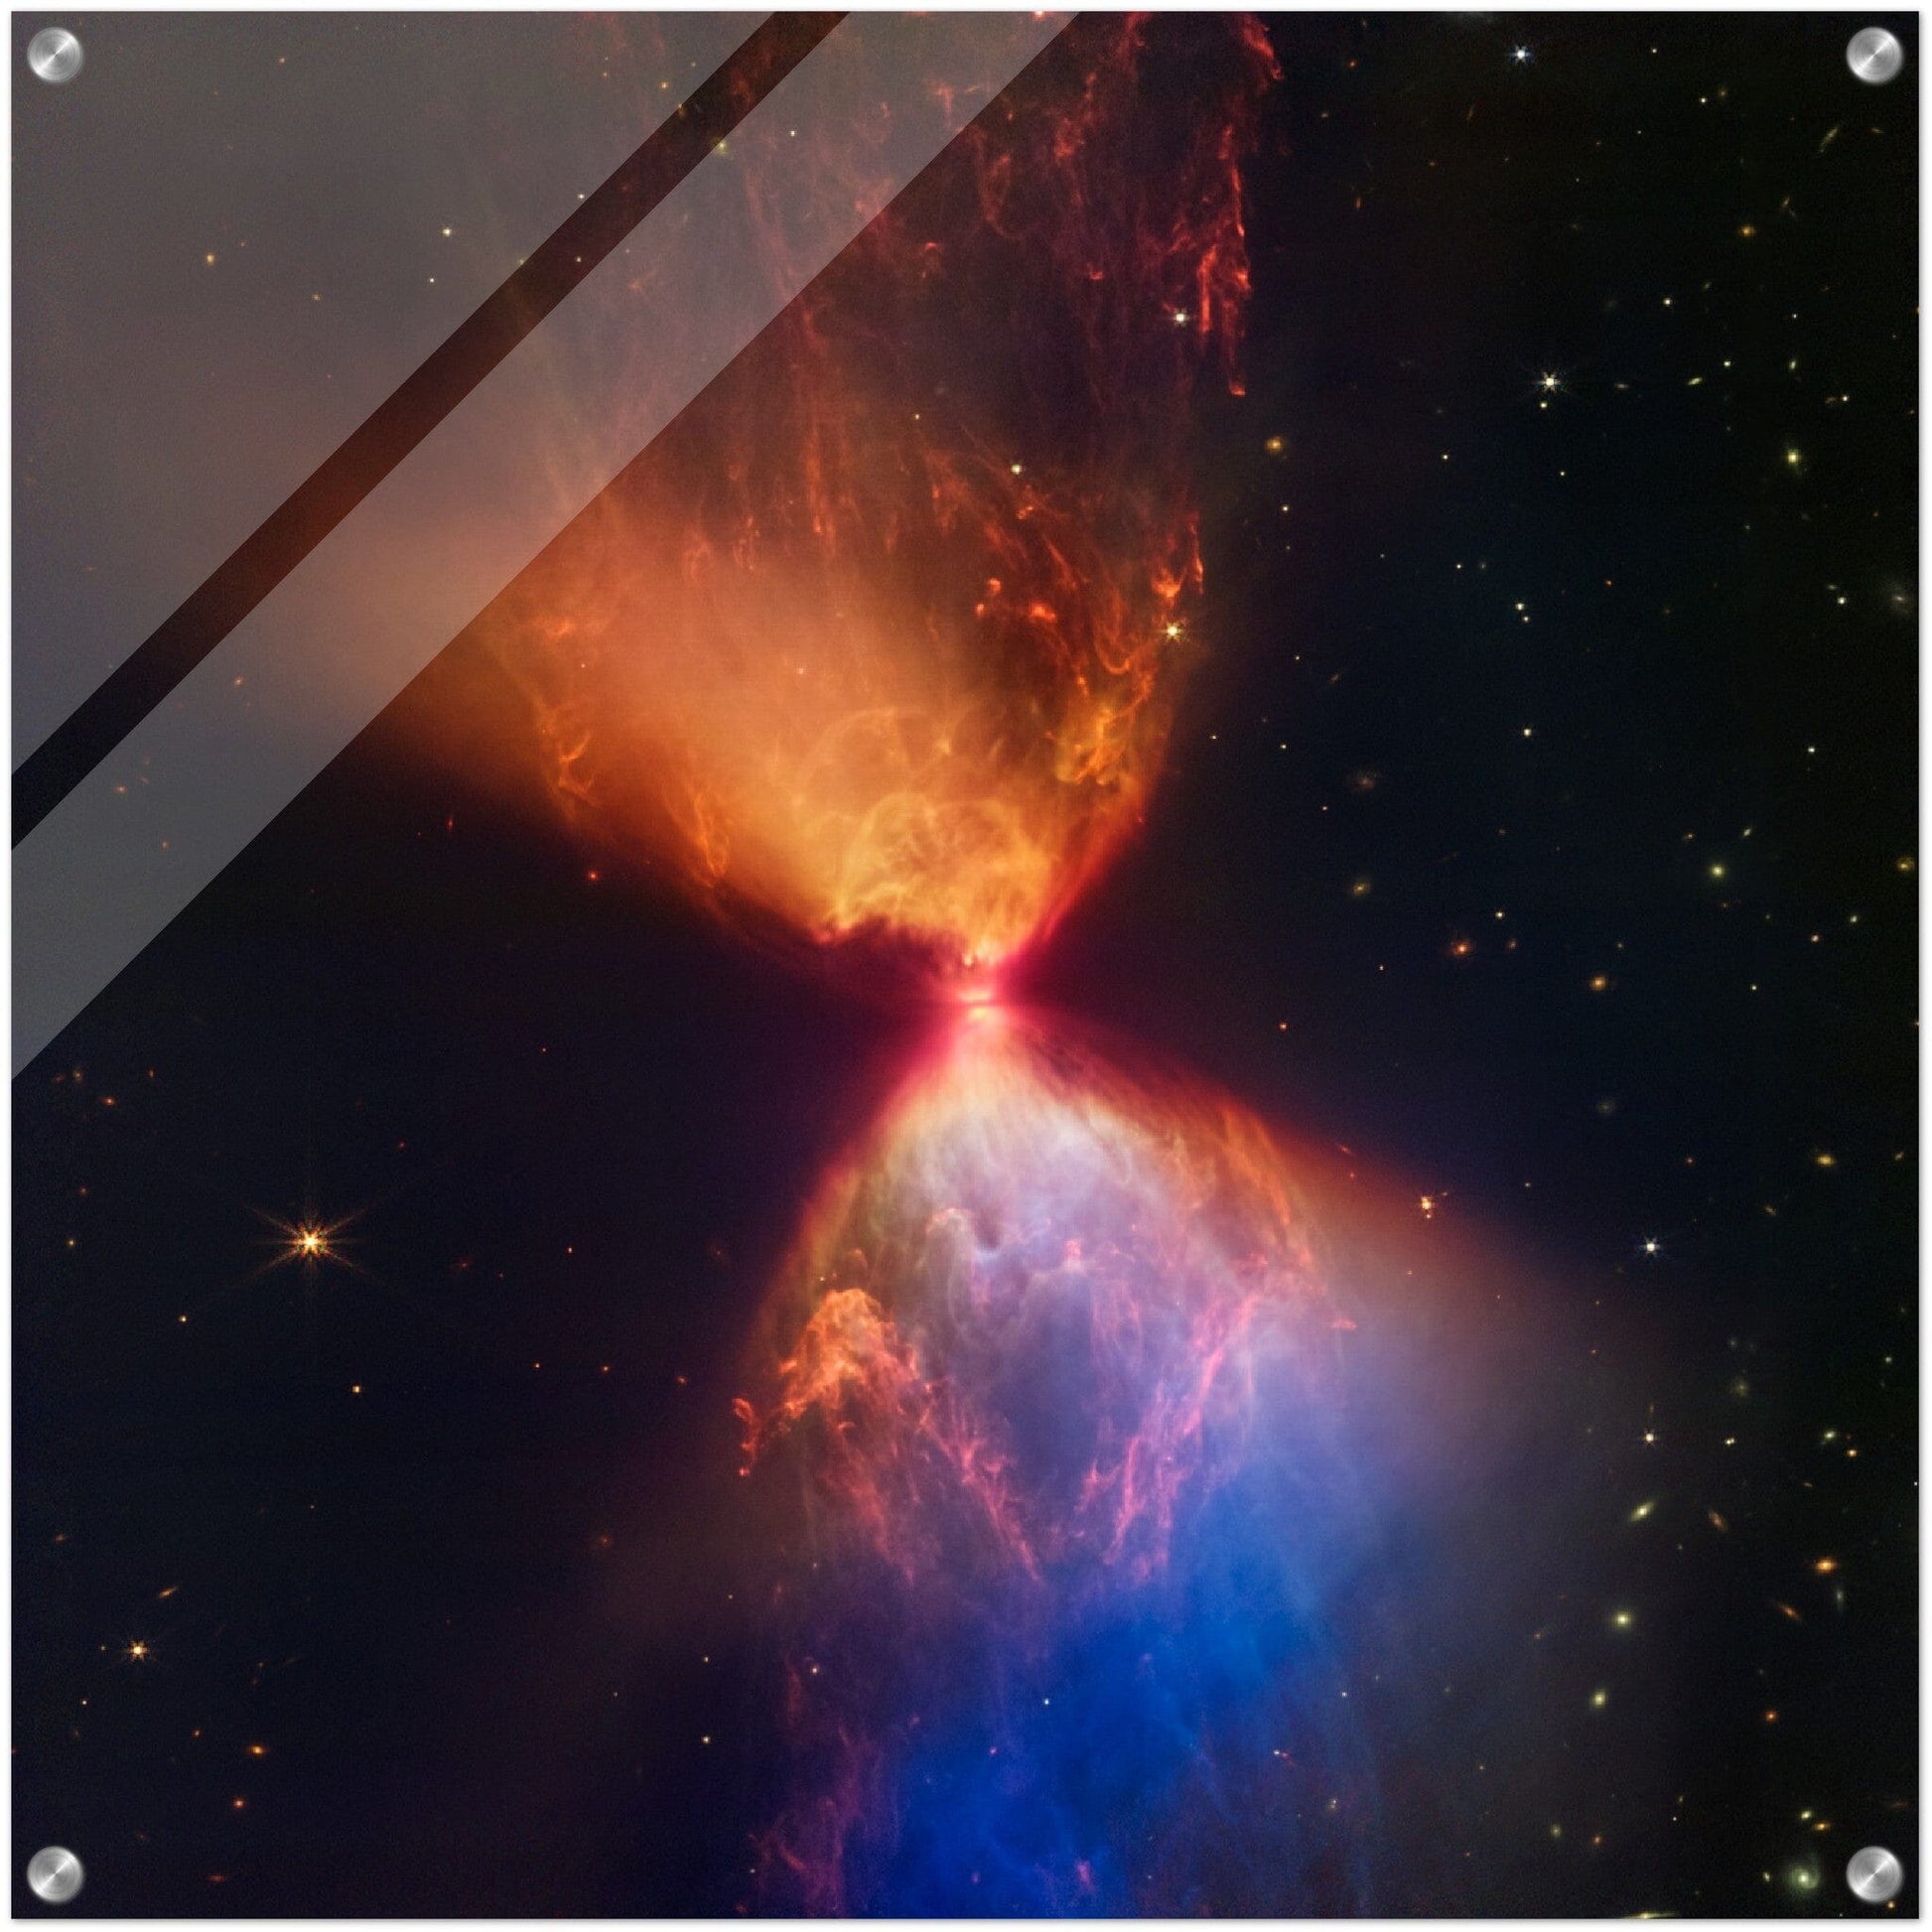 NASA - Poster - Acrylic - 11. L1527 and Protostar (NIRCam Image) - James Webb Space Telescope Acrylic Print TP Aviation Art 60x60 cm / 24x24″ 